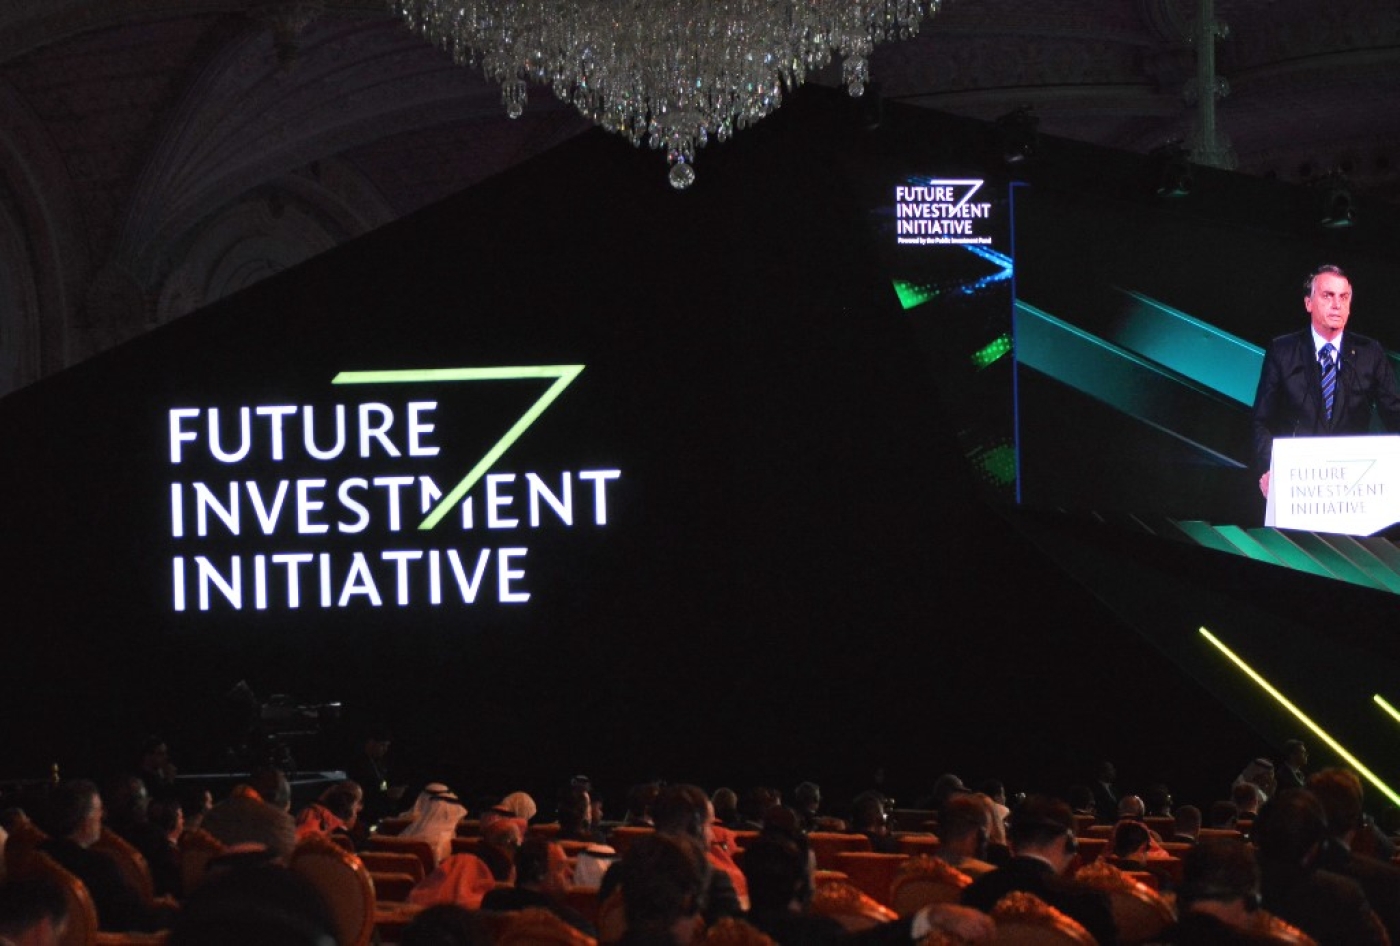 Brazilian President Jair Bolsonaro speaks during the Future Investment Initiative forum in Riyadh on 30 October 2019.